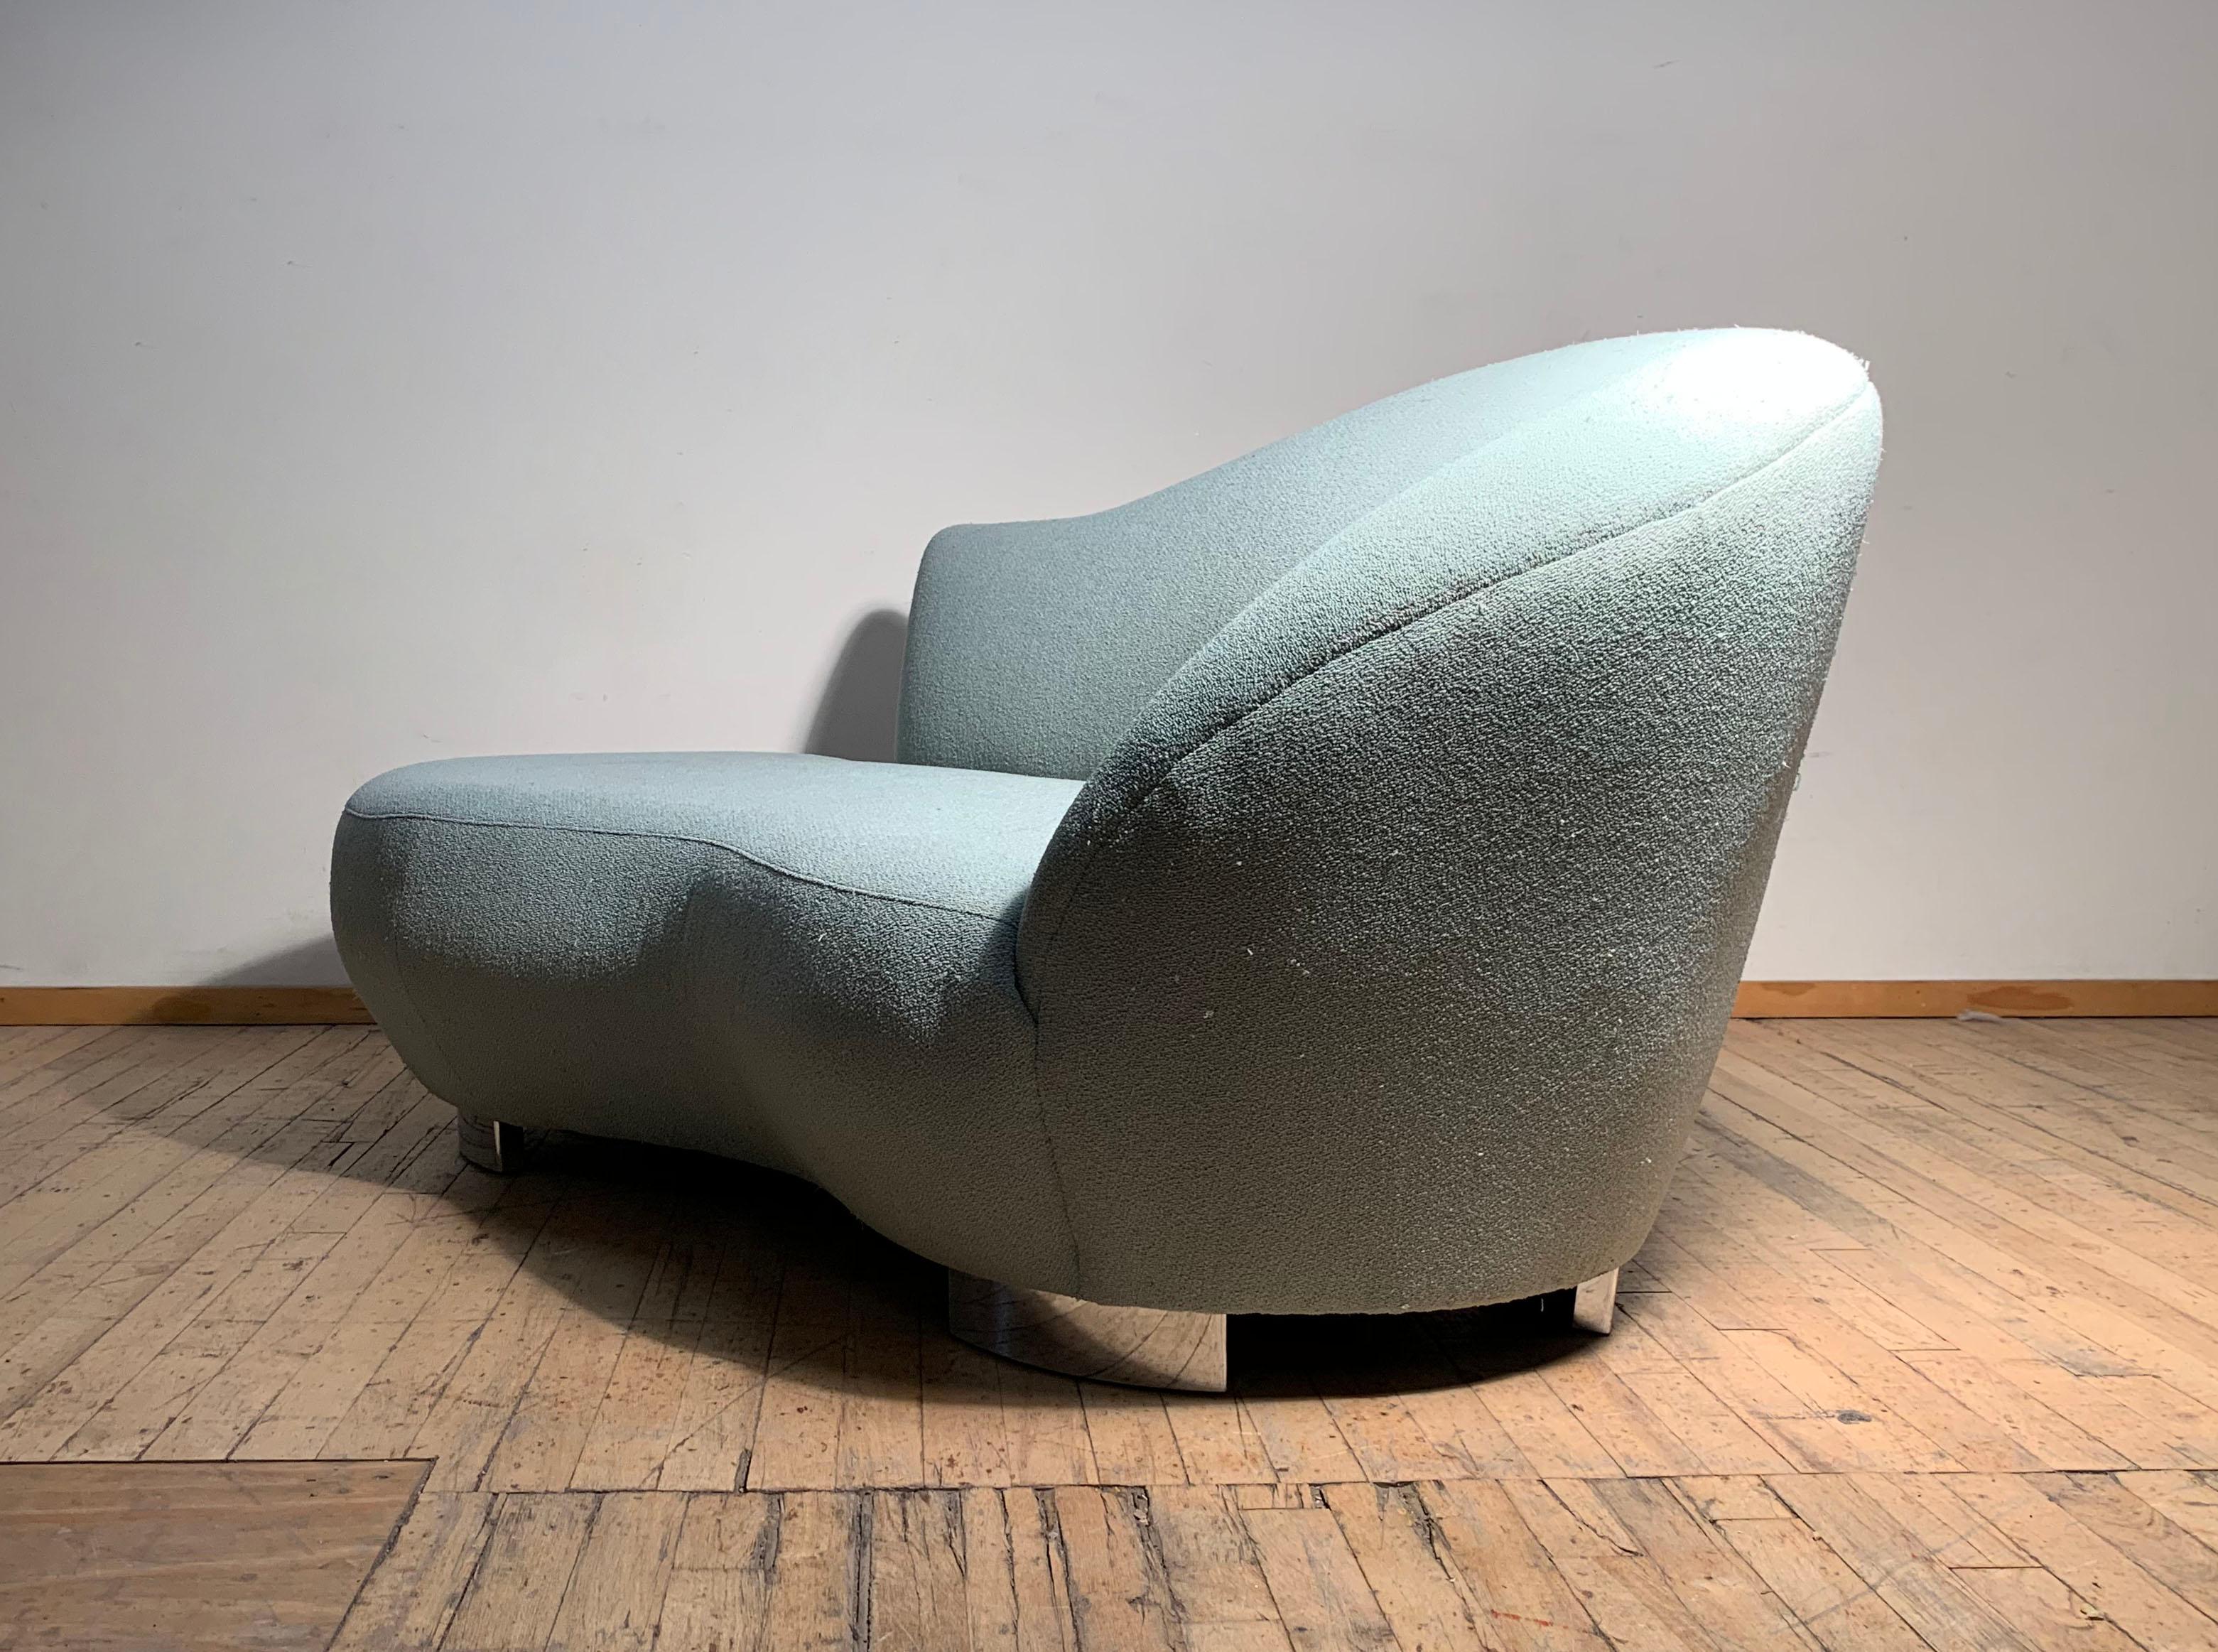 Upholstery Petite Vladimir Kagan Loveseat Cloud Sofa / Chaise Lounge 'Pair Available'